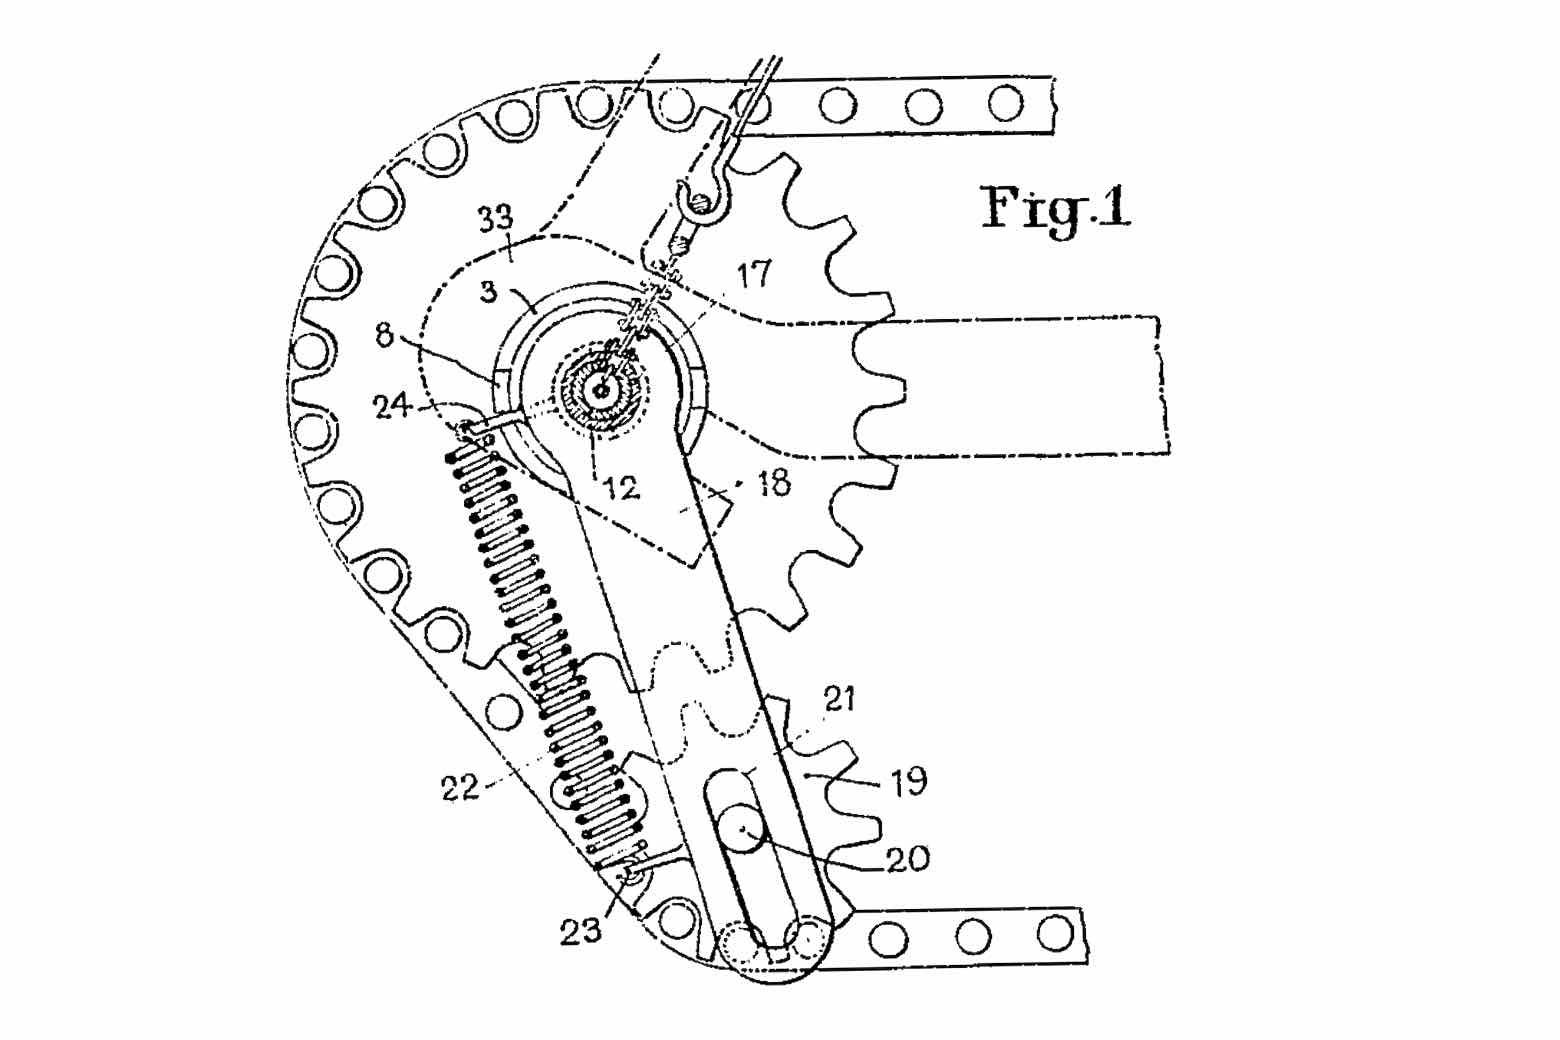 French Patent 771,557 - Caminade main image